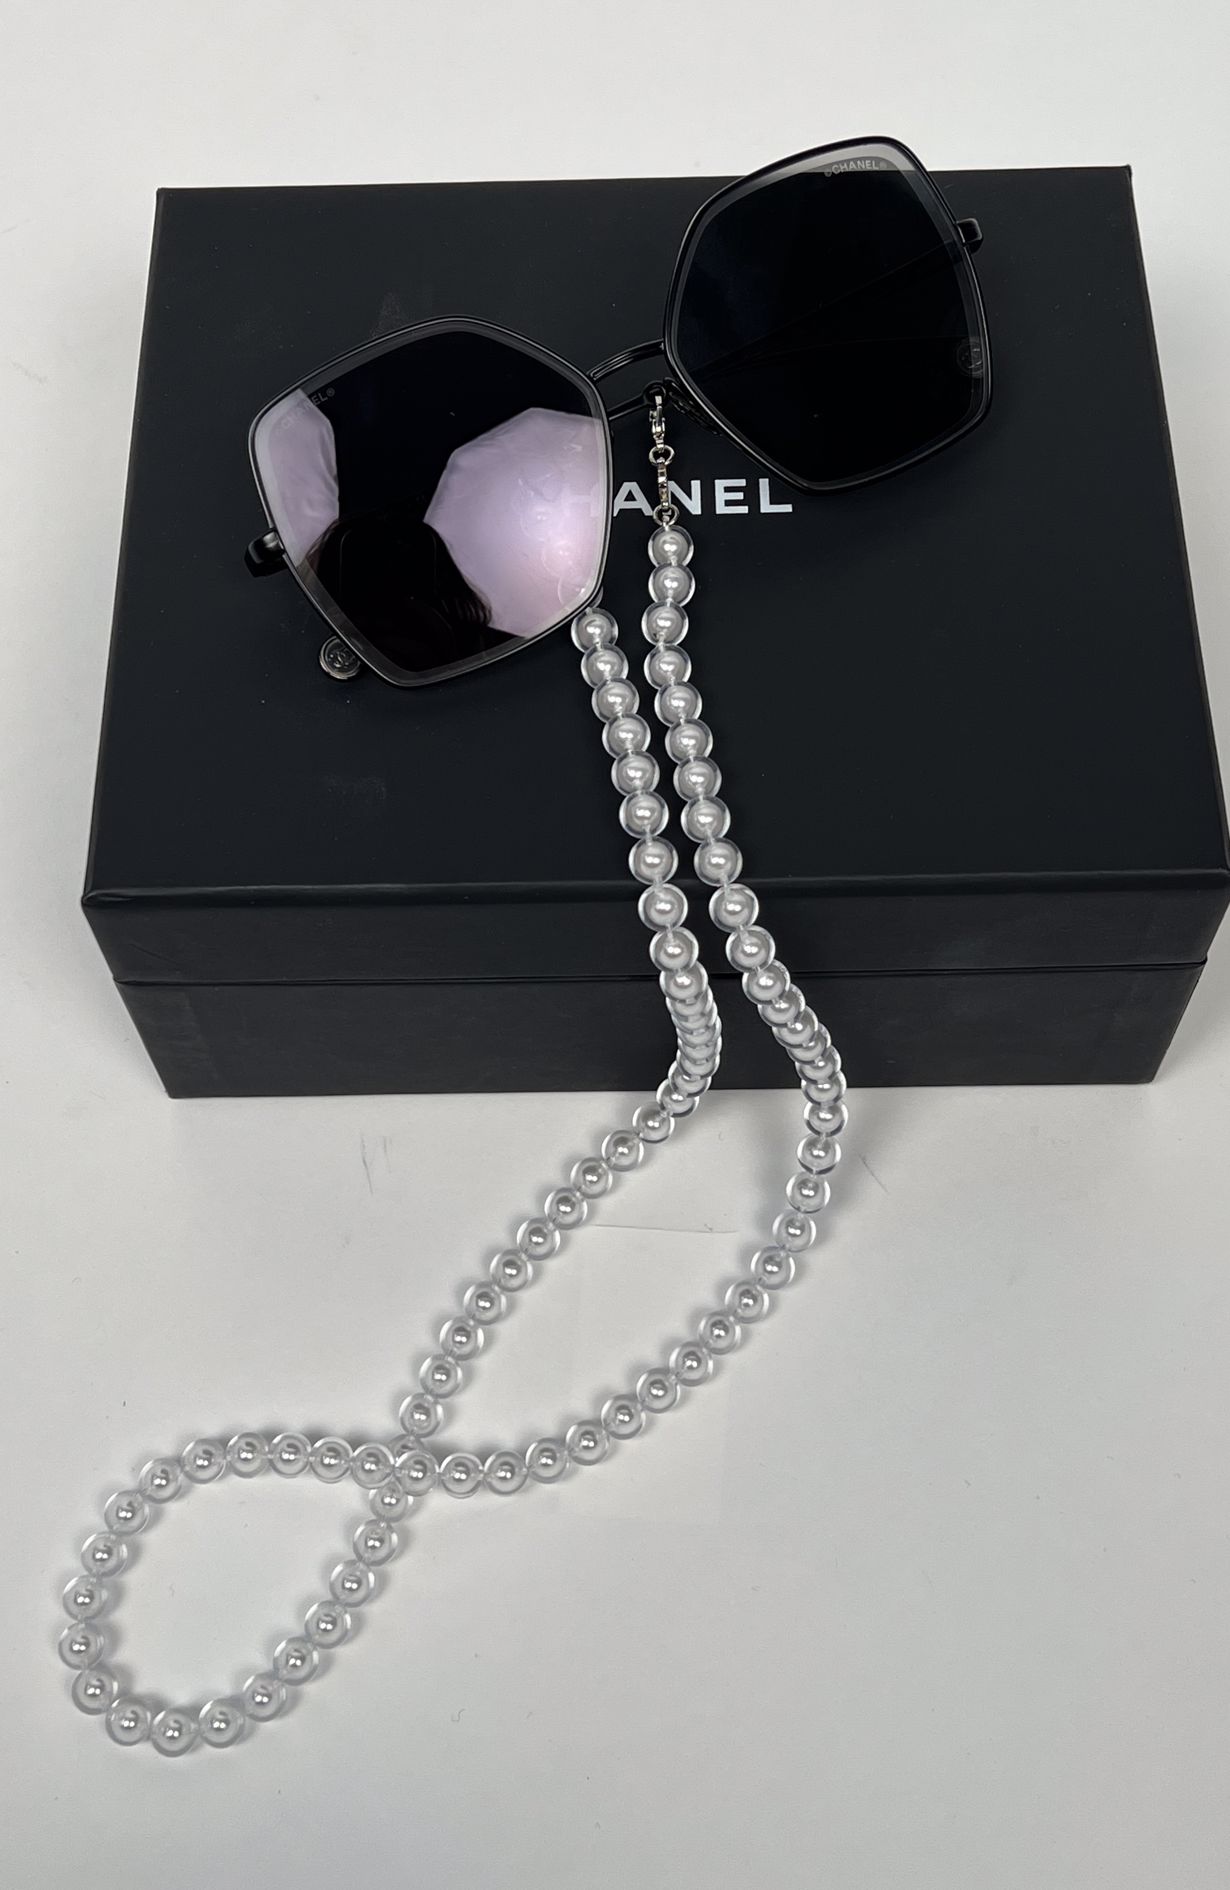 Chanel sunglasses incl chain and box